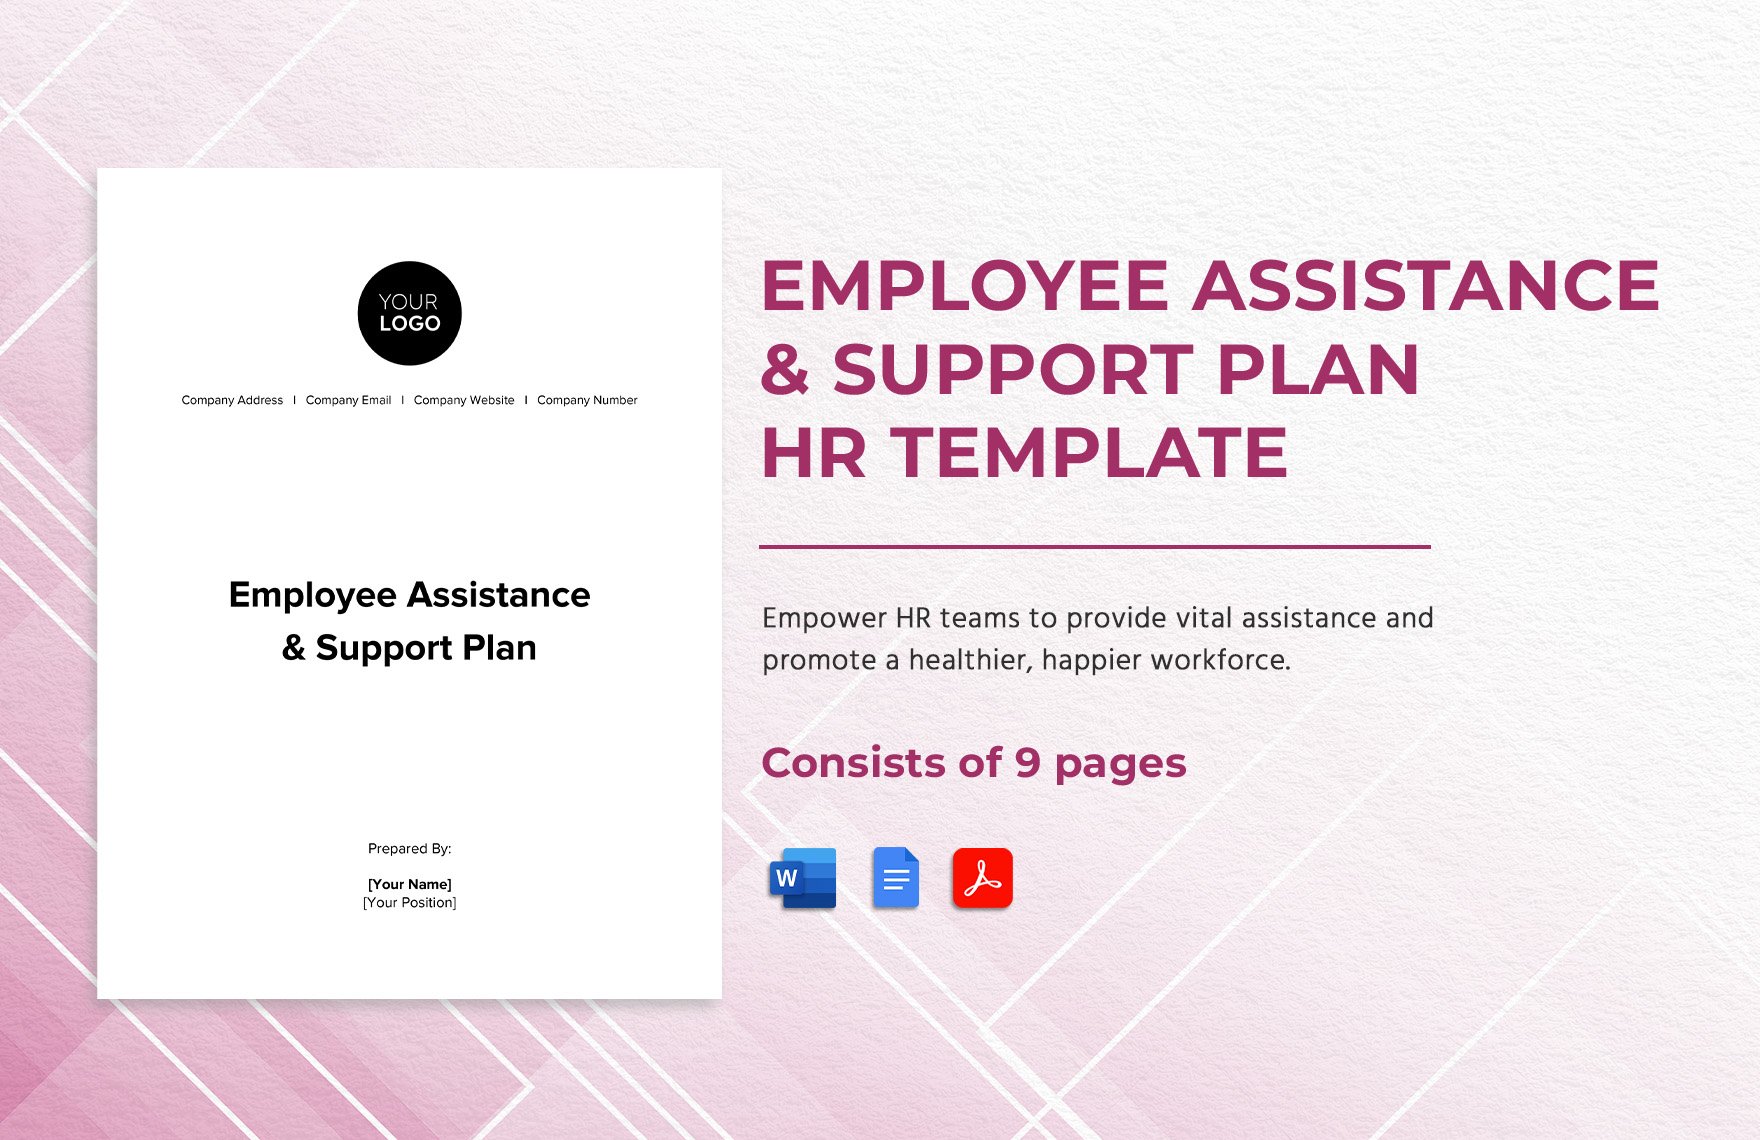 Employee Assistance & Support Plan HR Template